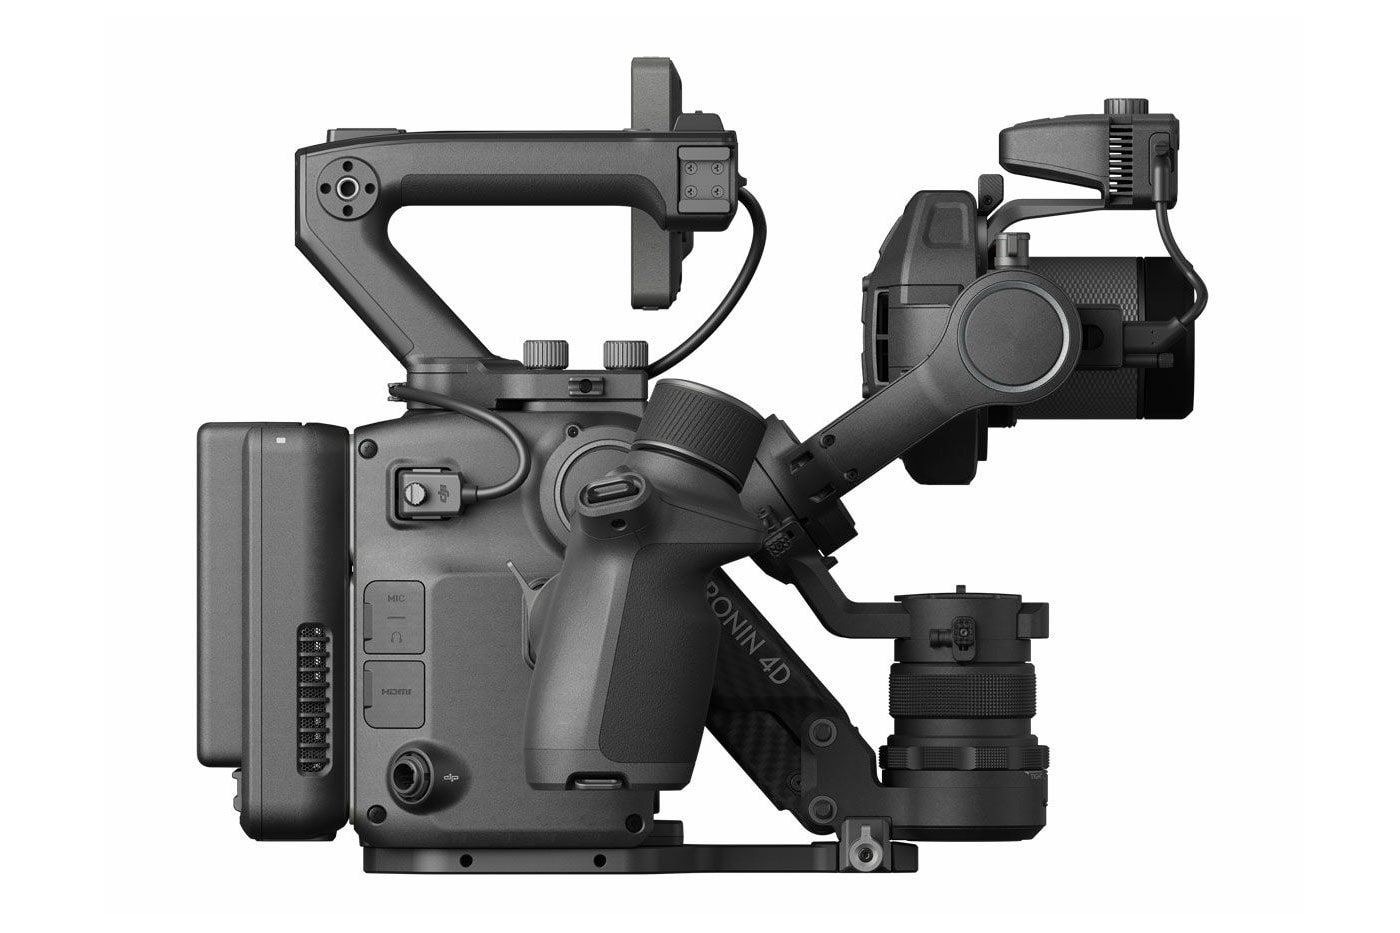 DJI Ronin 4D cinema camera gimbals 8k Cinematography Cinema Camera Tech cameras filming 